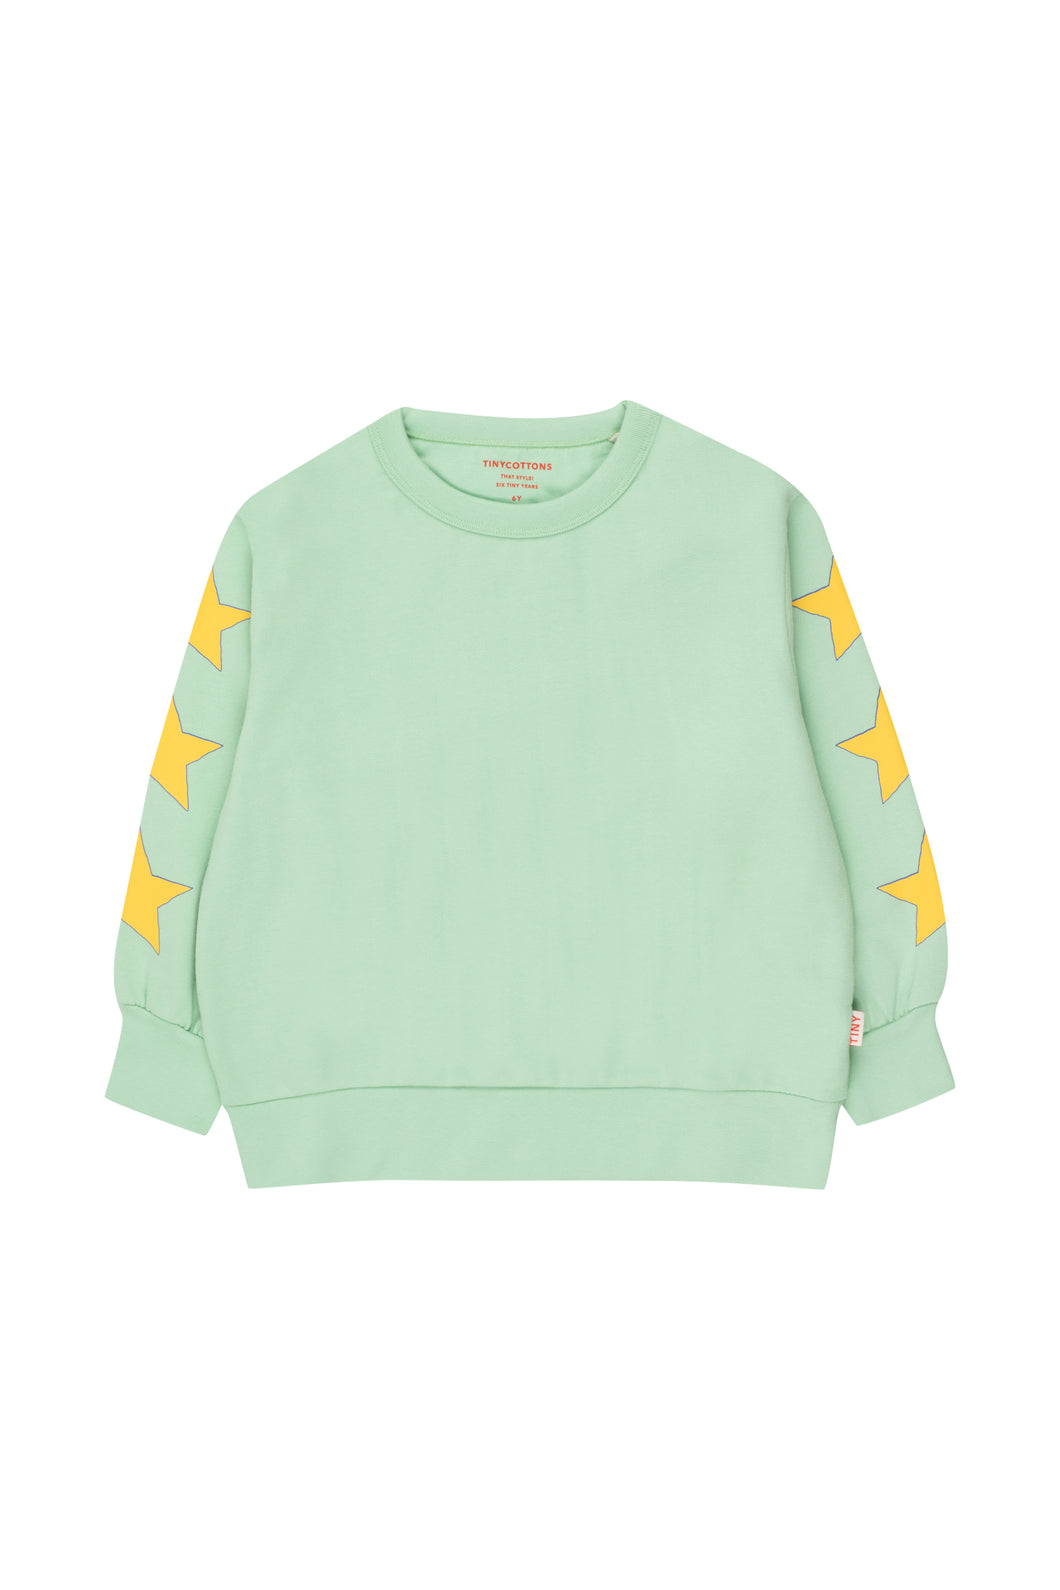 Tinycottons / KID / Stars Sweatshirt / Light Green